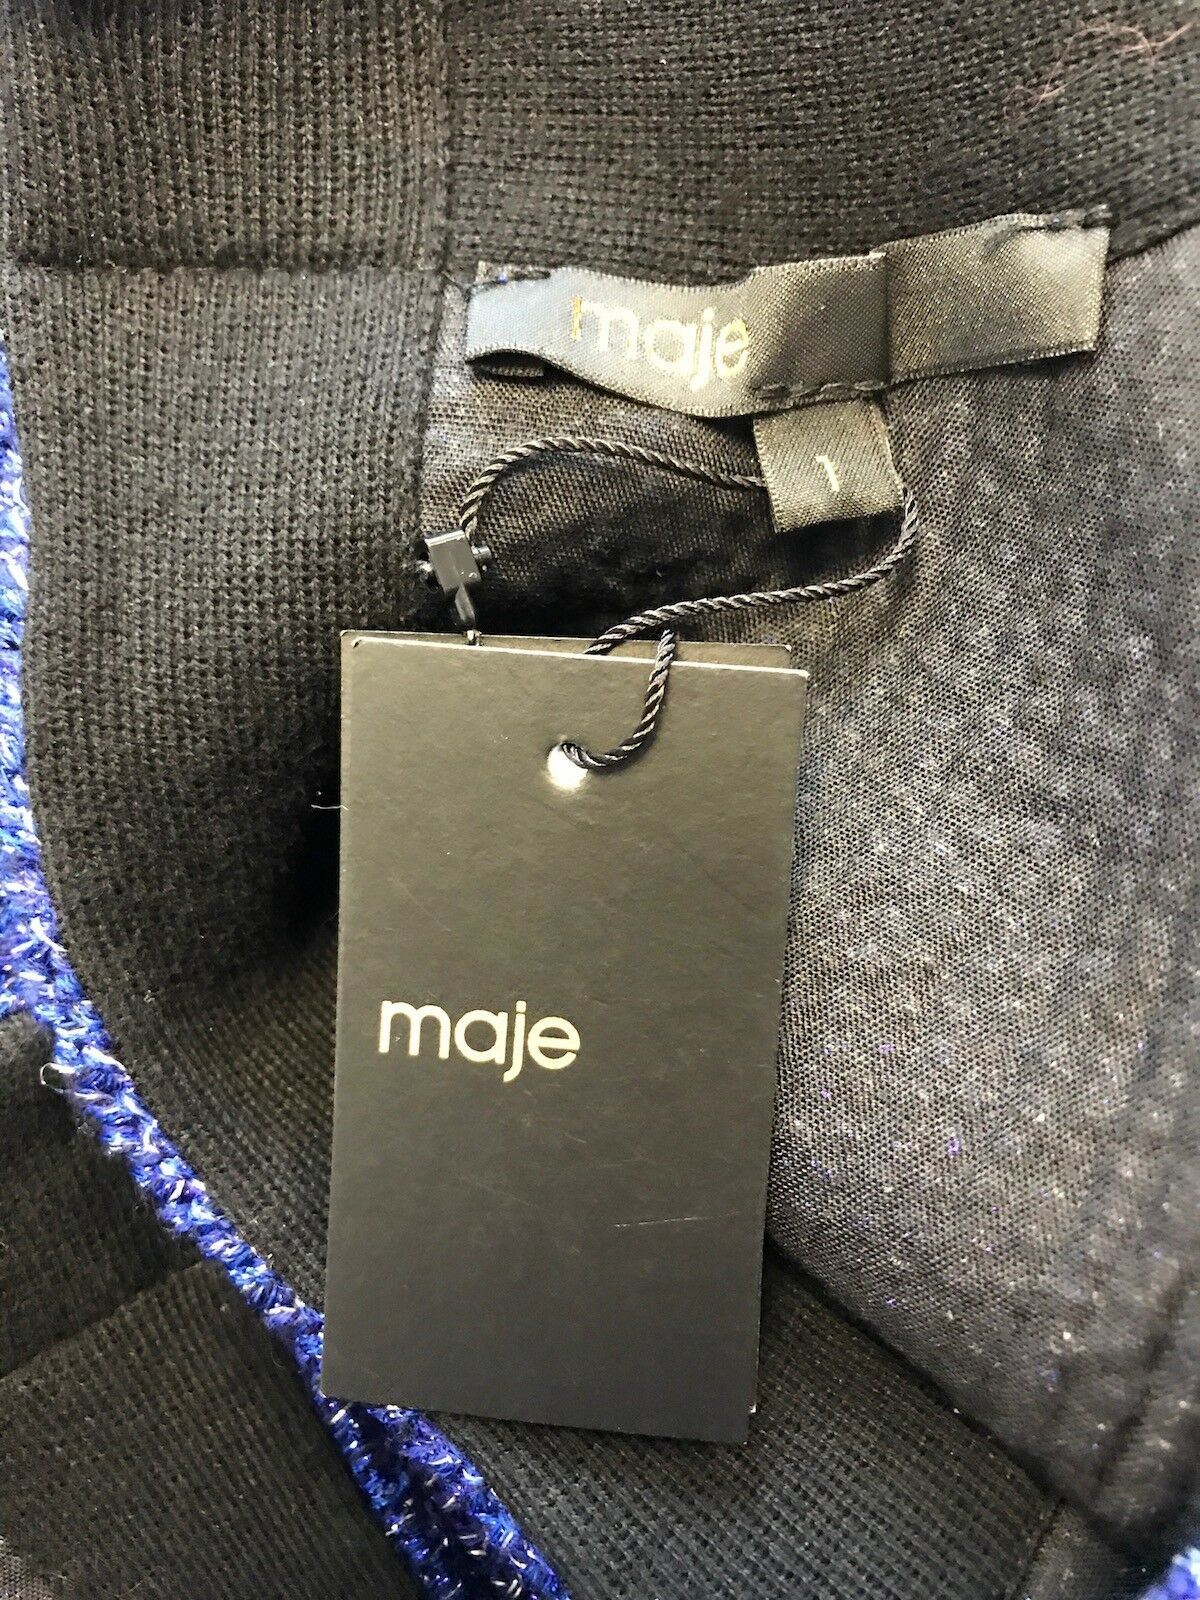 Maje Robe Trapeze Marine Blue Sleeveless Dress UK 8 US 4 EU 36 BNWT RRP £289 Timeless Fashions